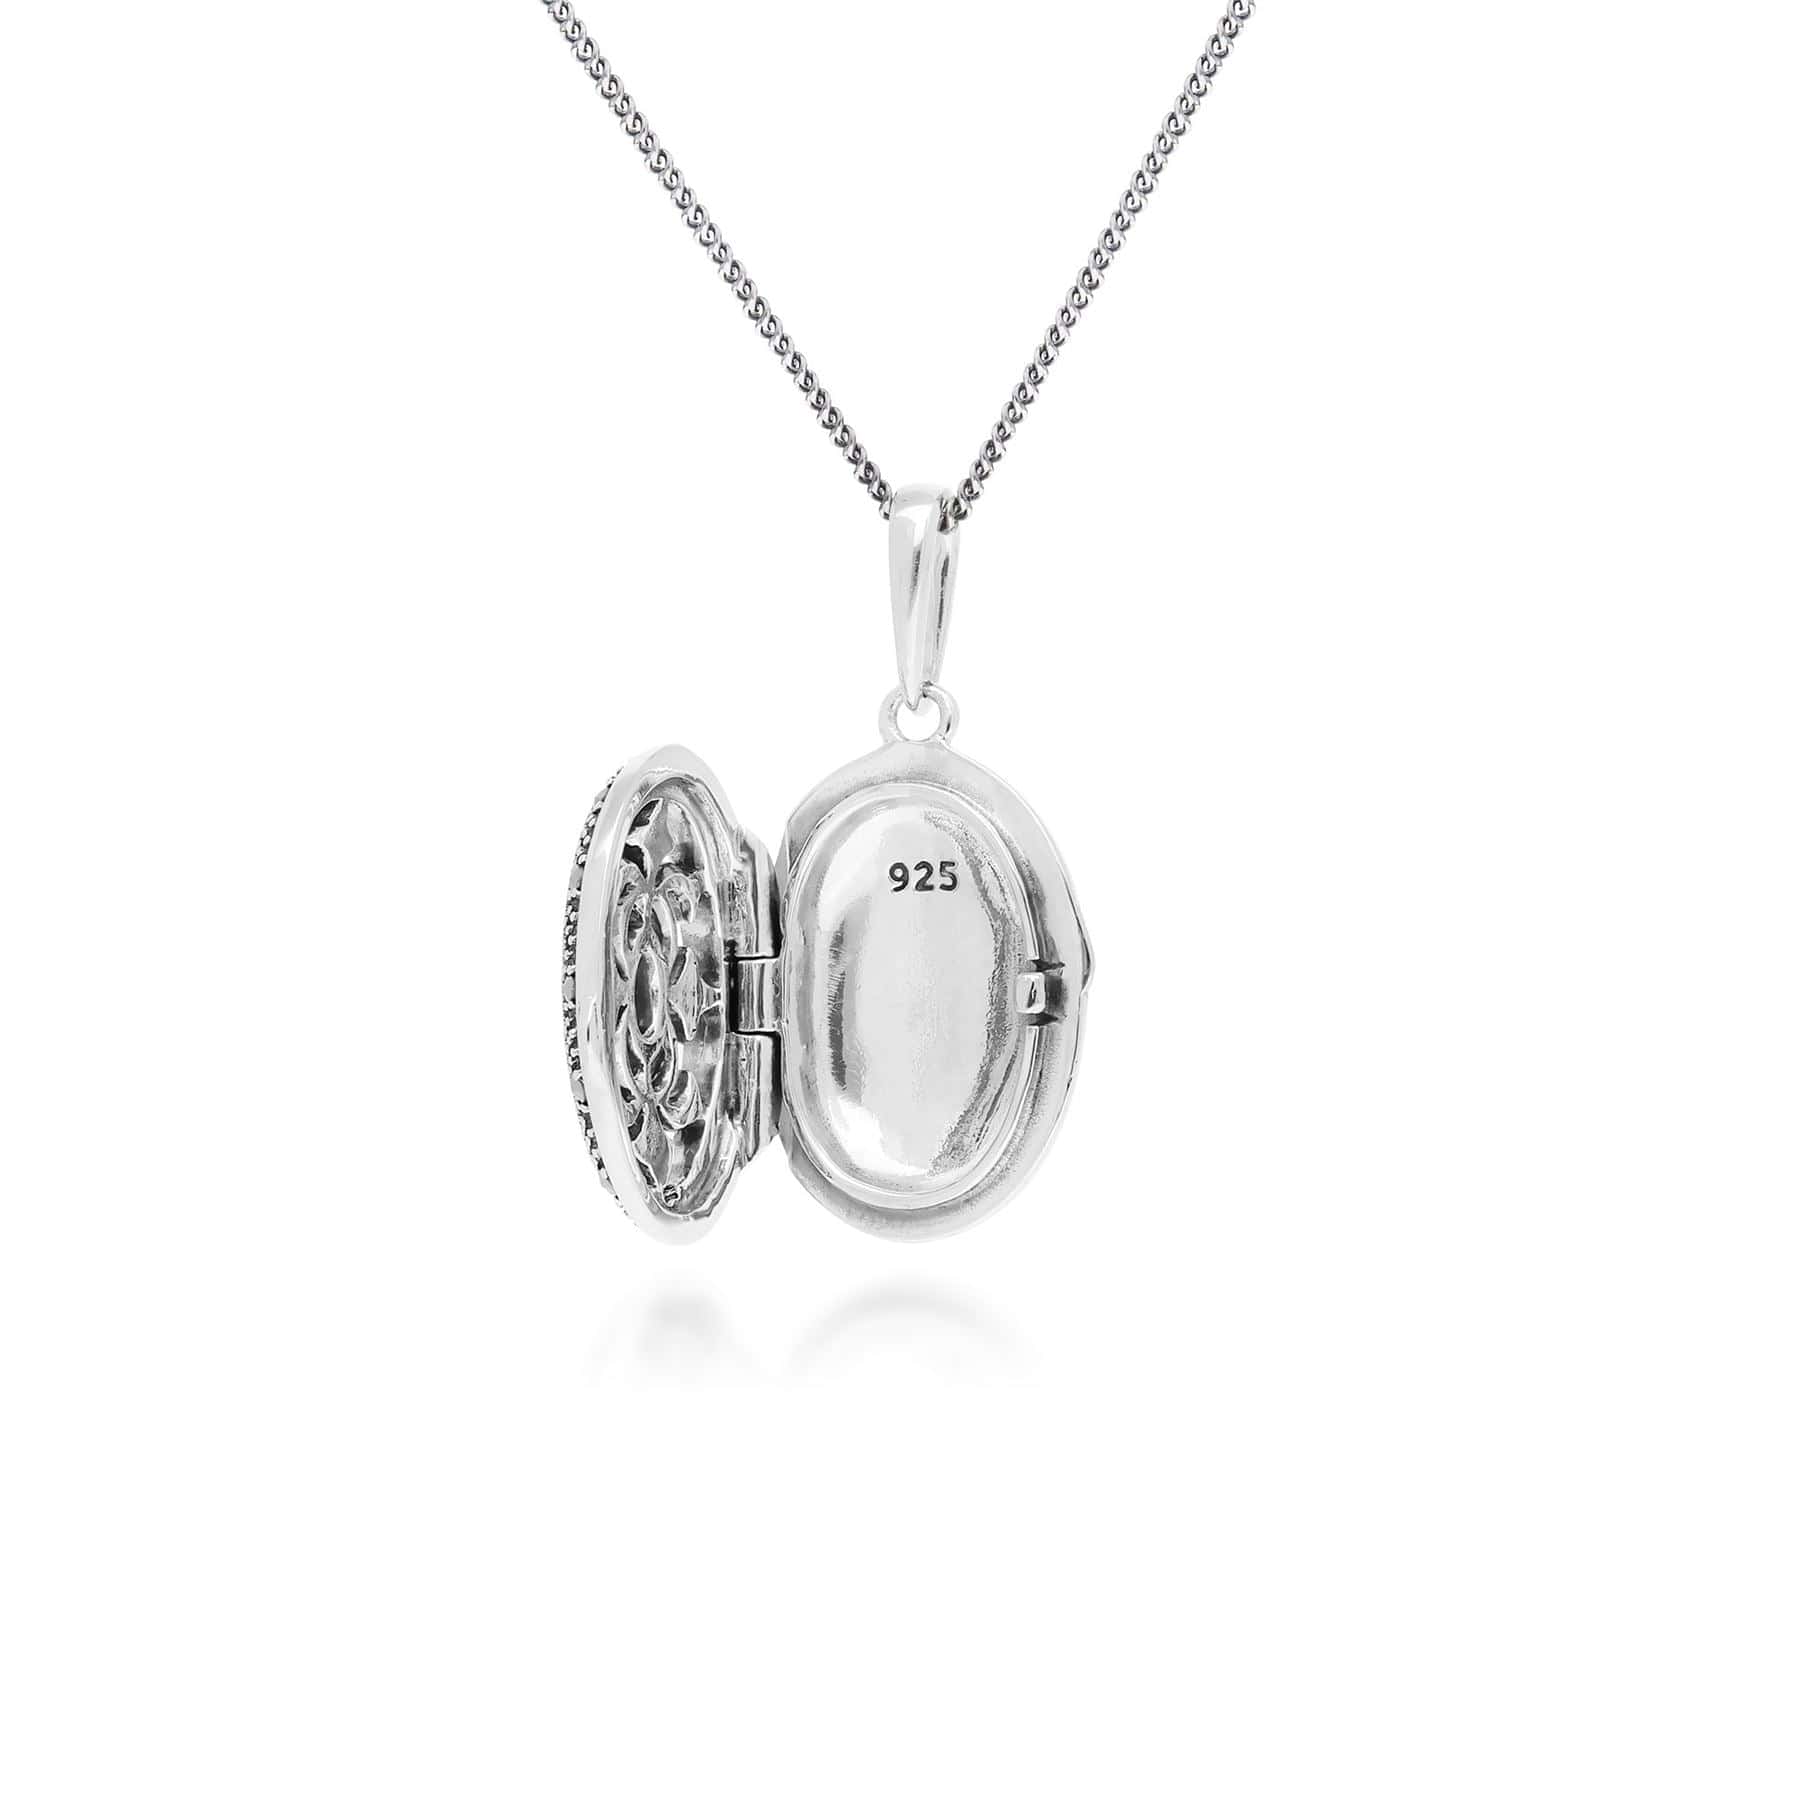 Art Nouveau Style Oval Tanzanite & Marcasite Locket Necklace in 925 Sterling Silver - Gemondo